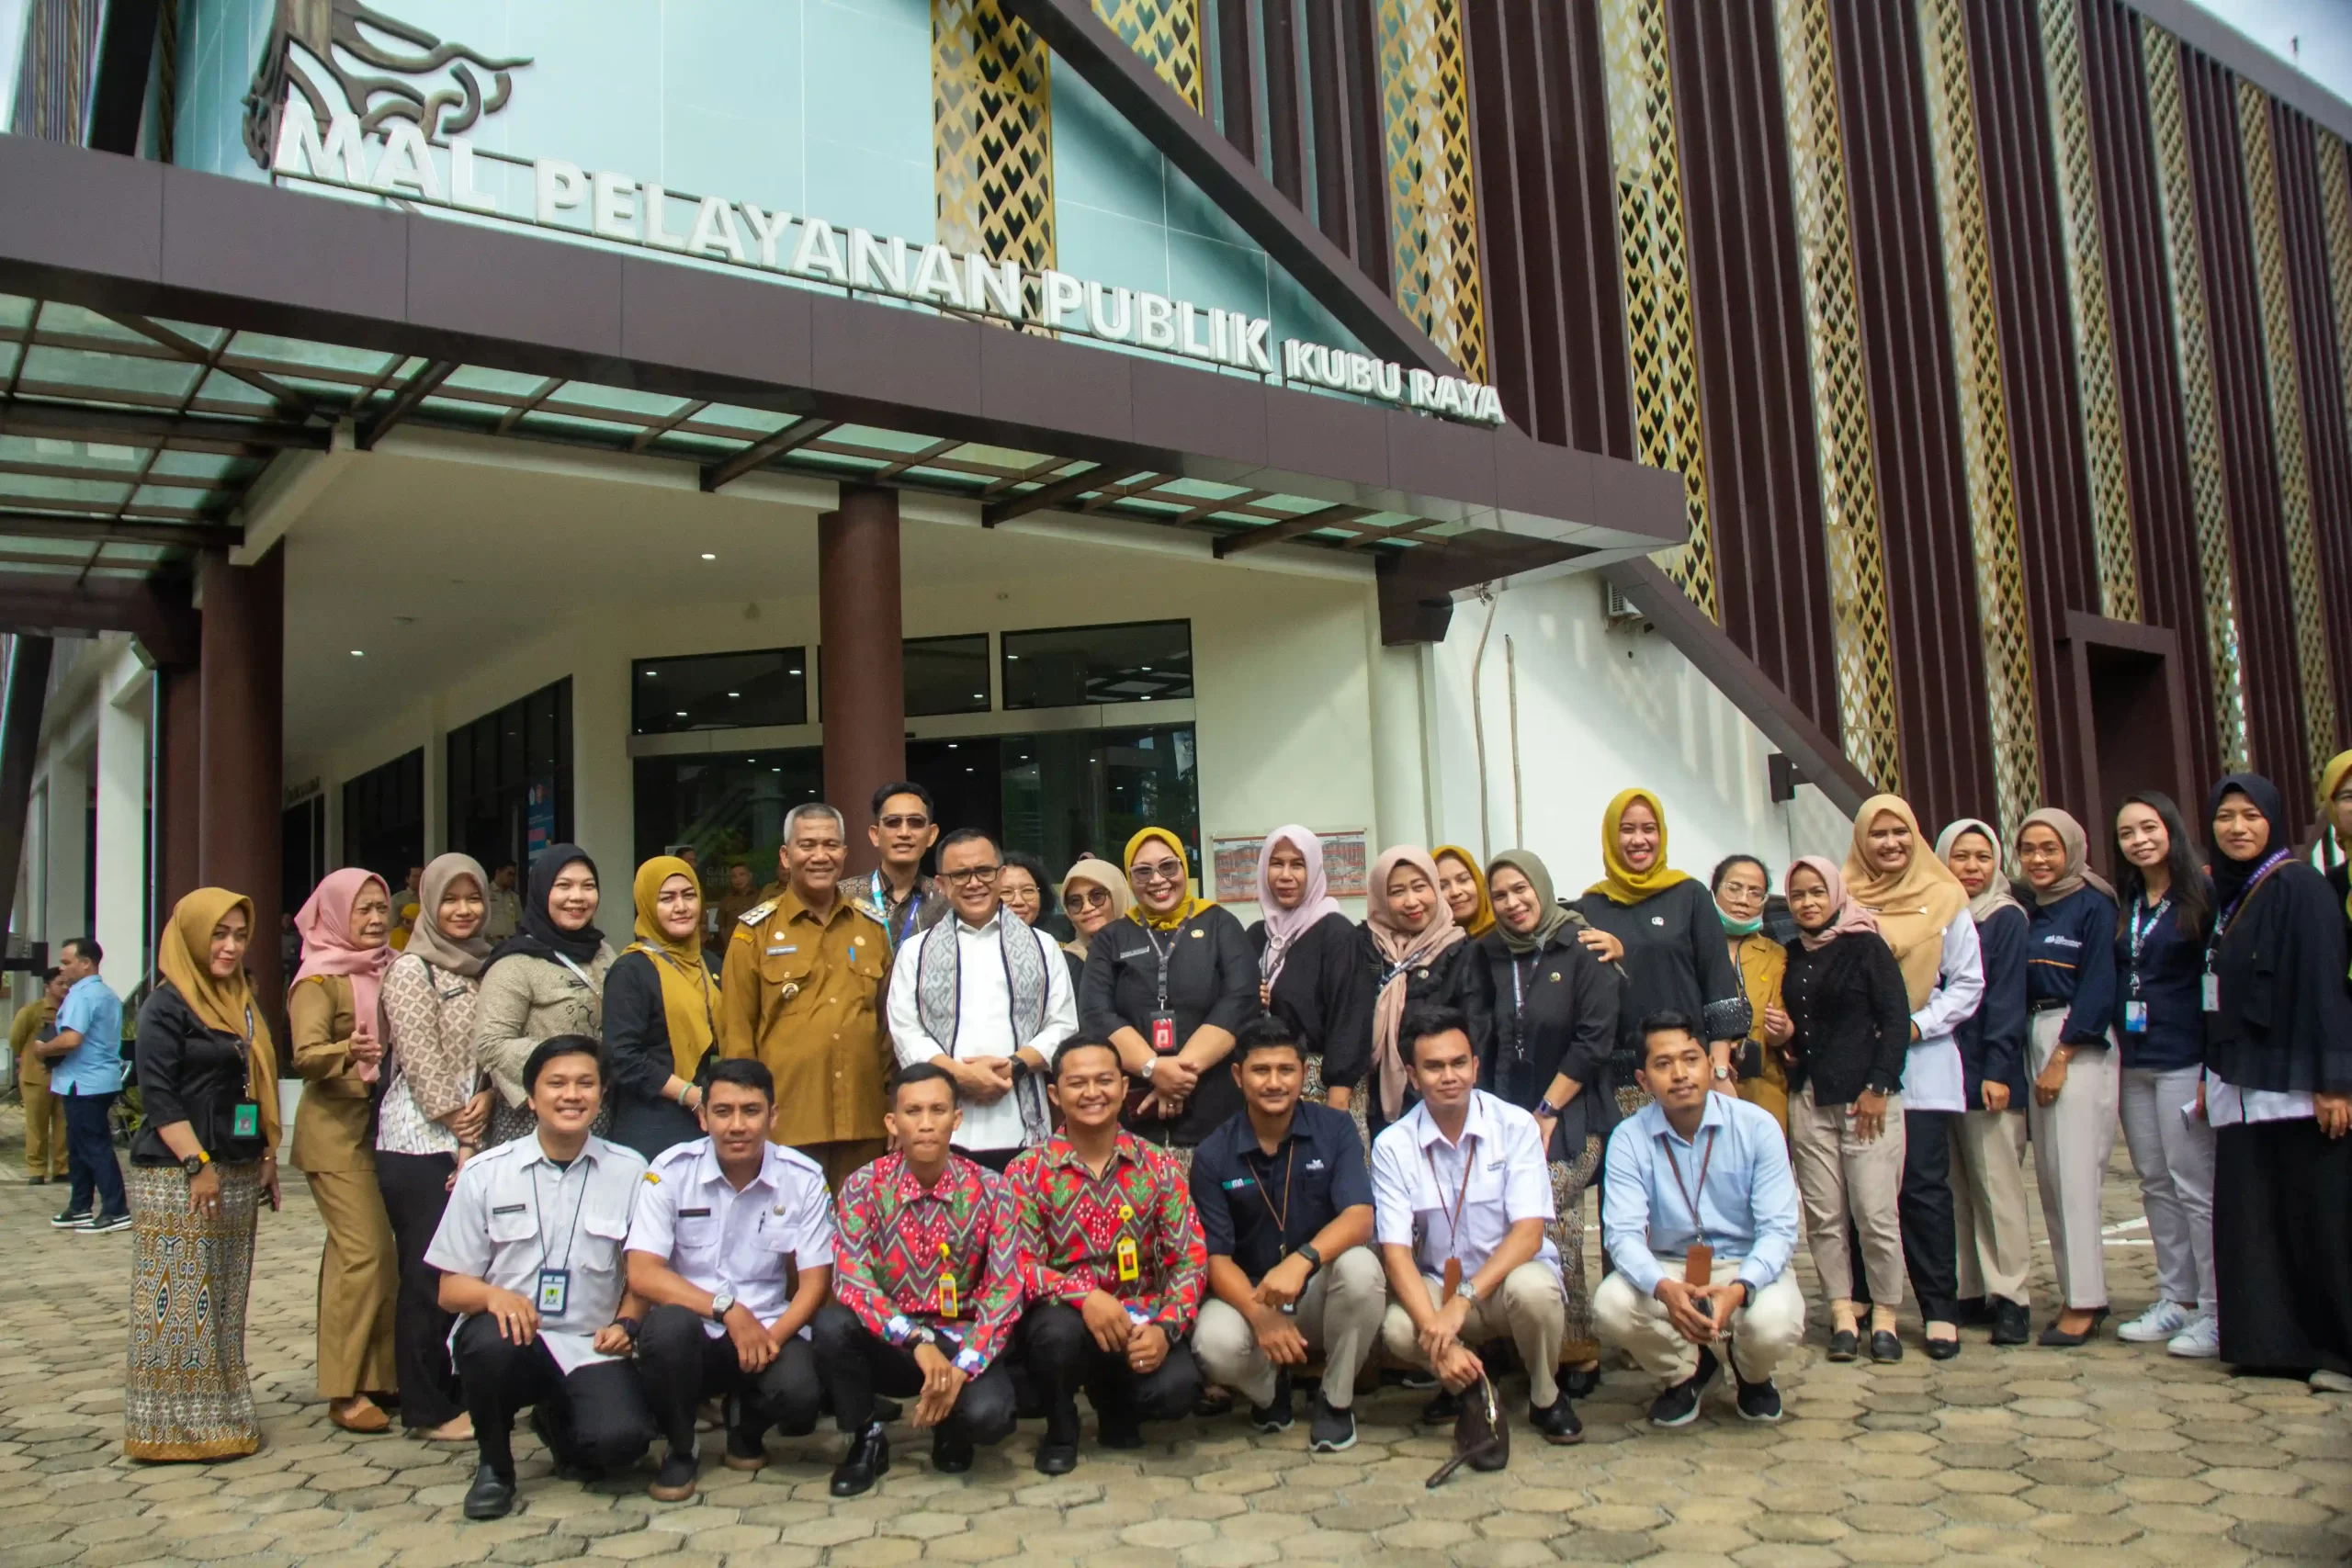 Kunjungan Menteri PAN-RB Republik Indonesia Meninjau Mall Pelayanan Publik (MPP) Kabupaten Kubu Raya